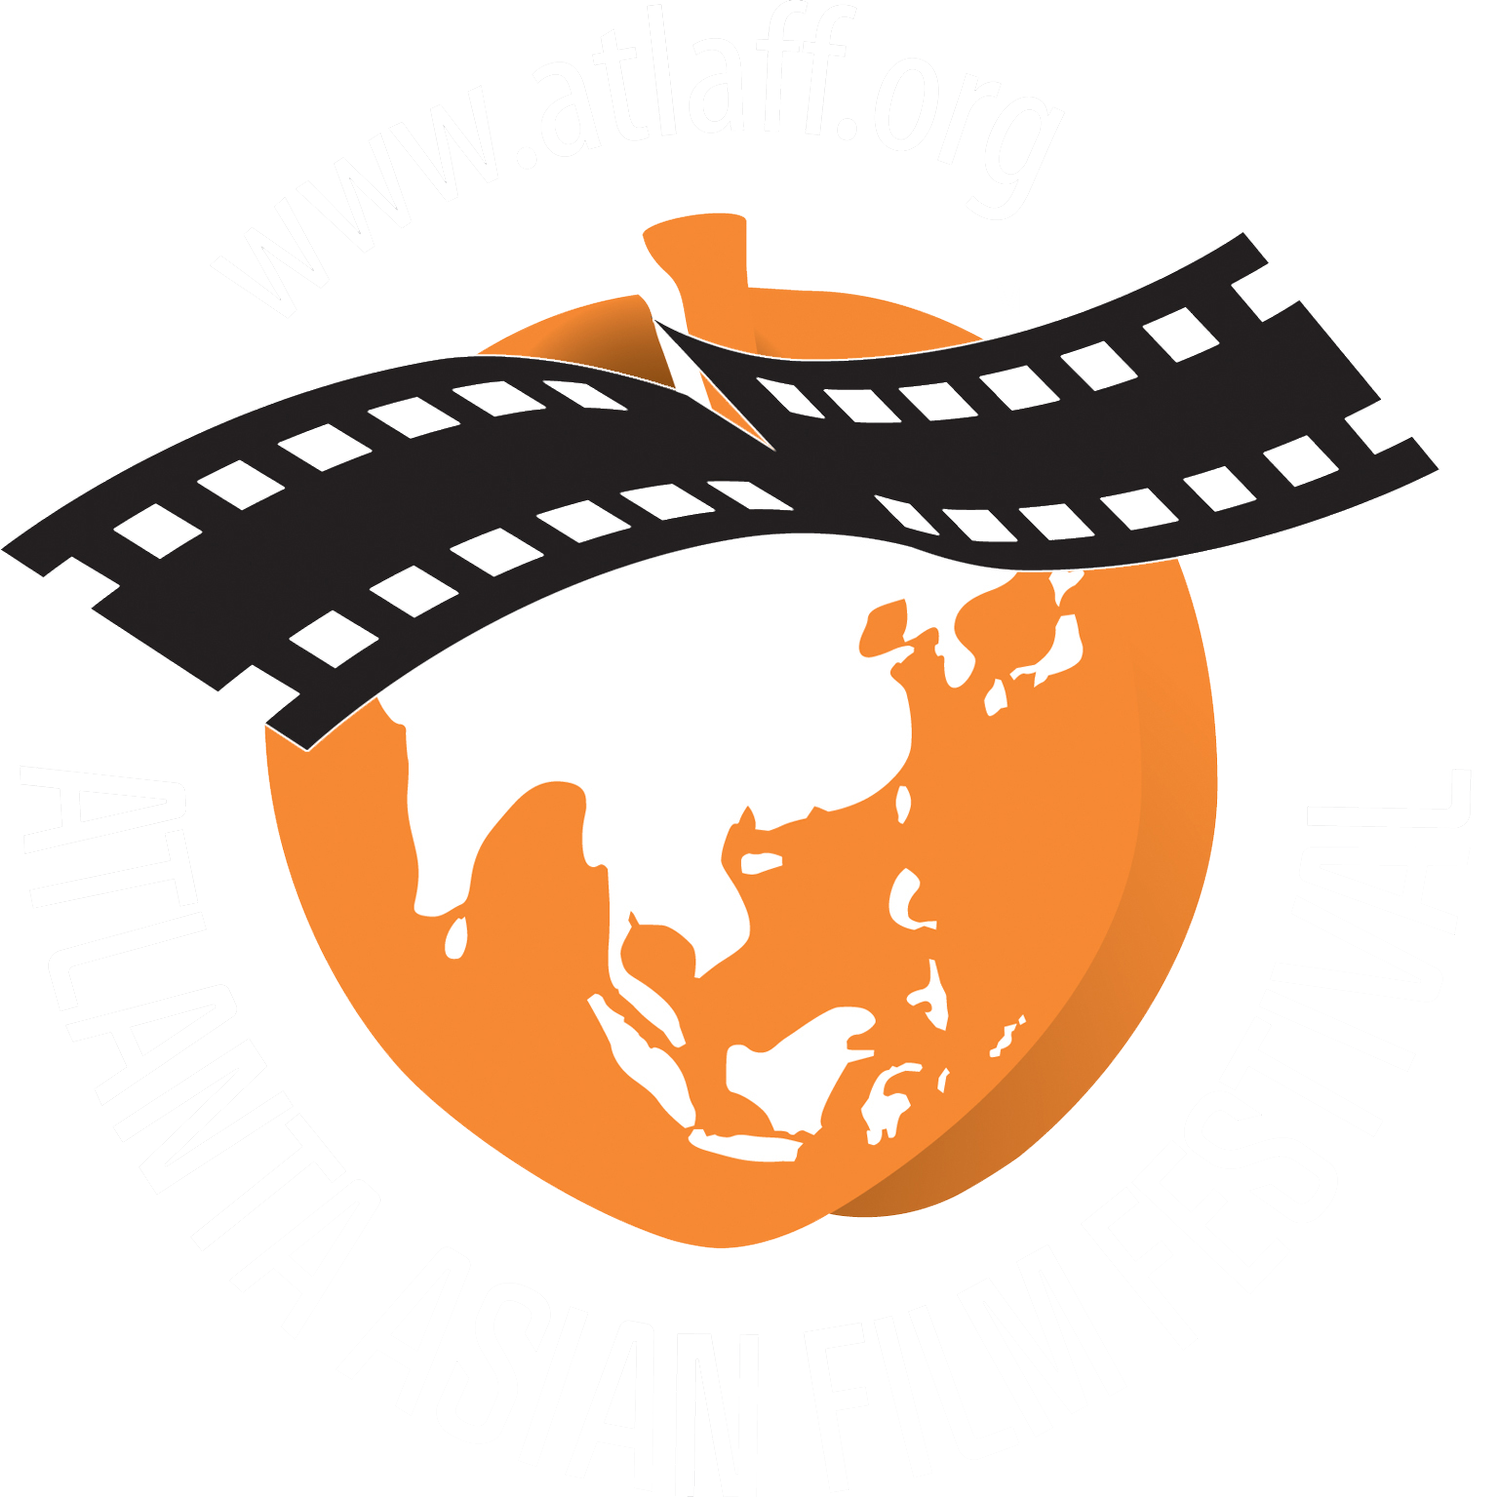 Atlanta Asian Film Festival